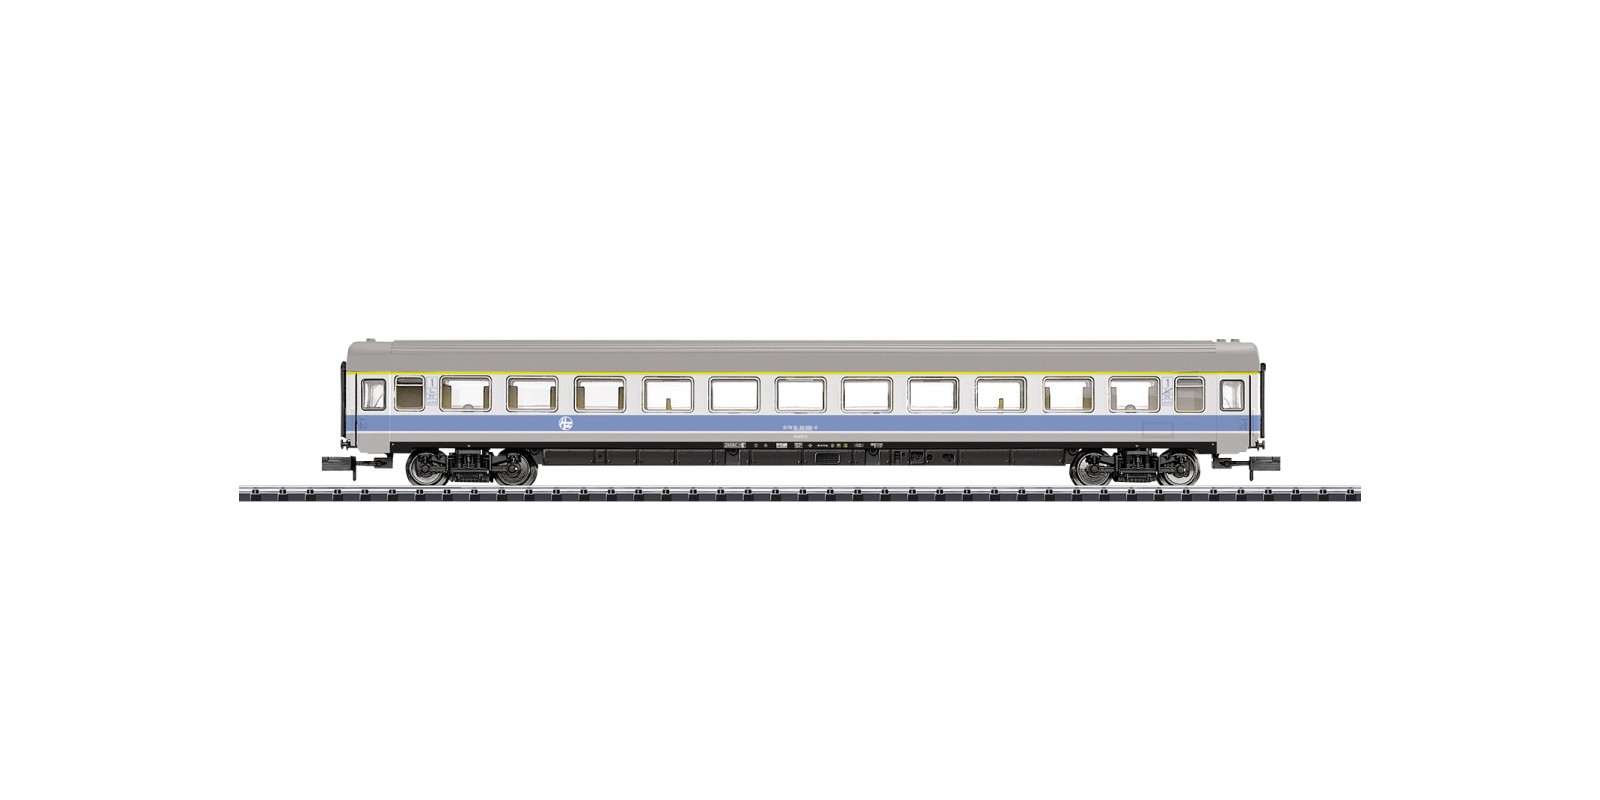 T15593 "MIMARA" Express Train Passenger Car